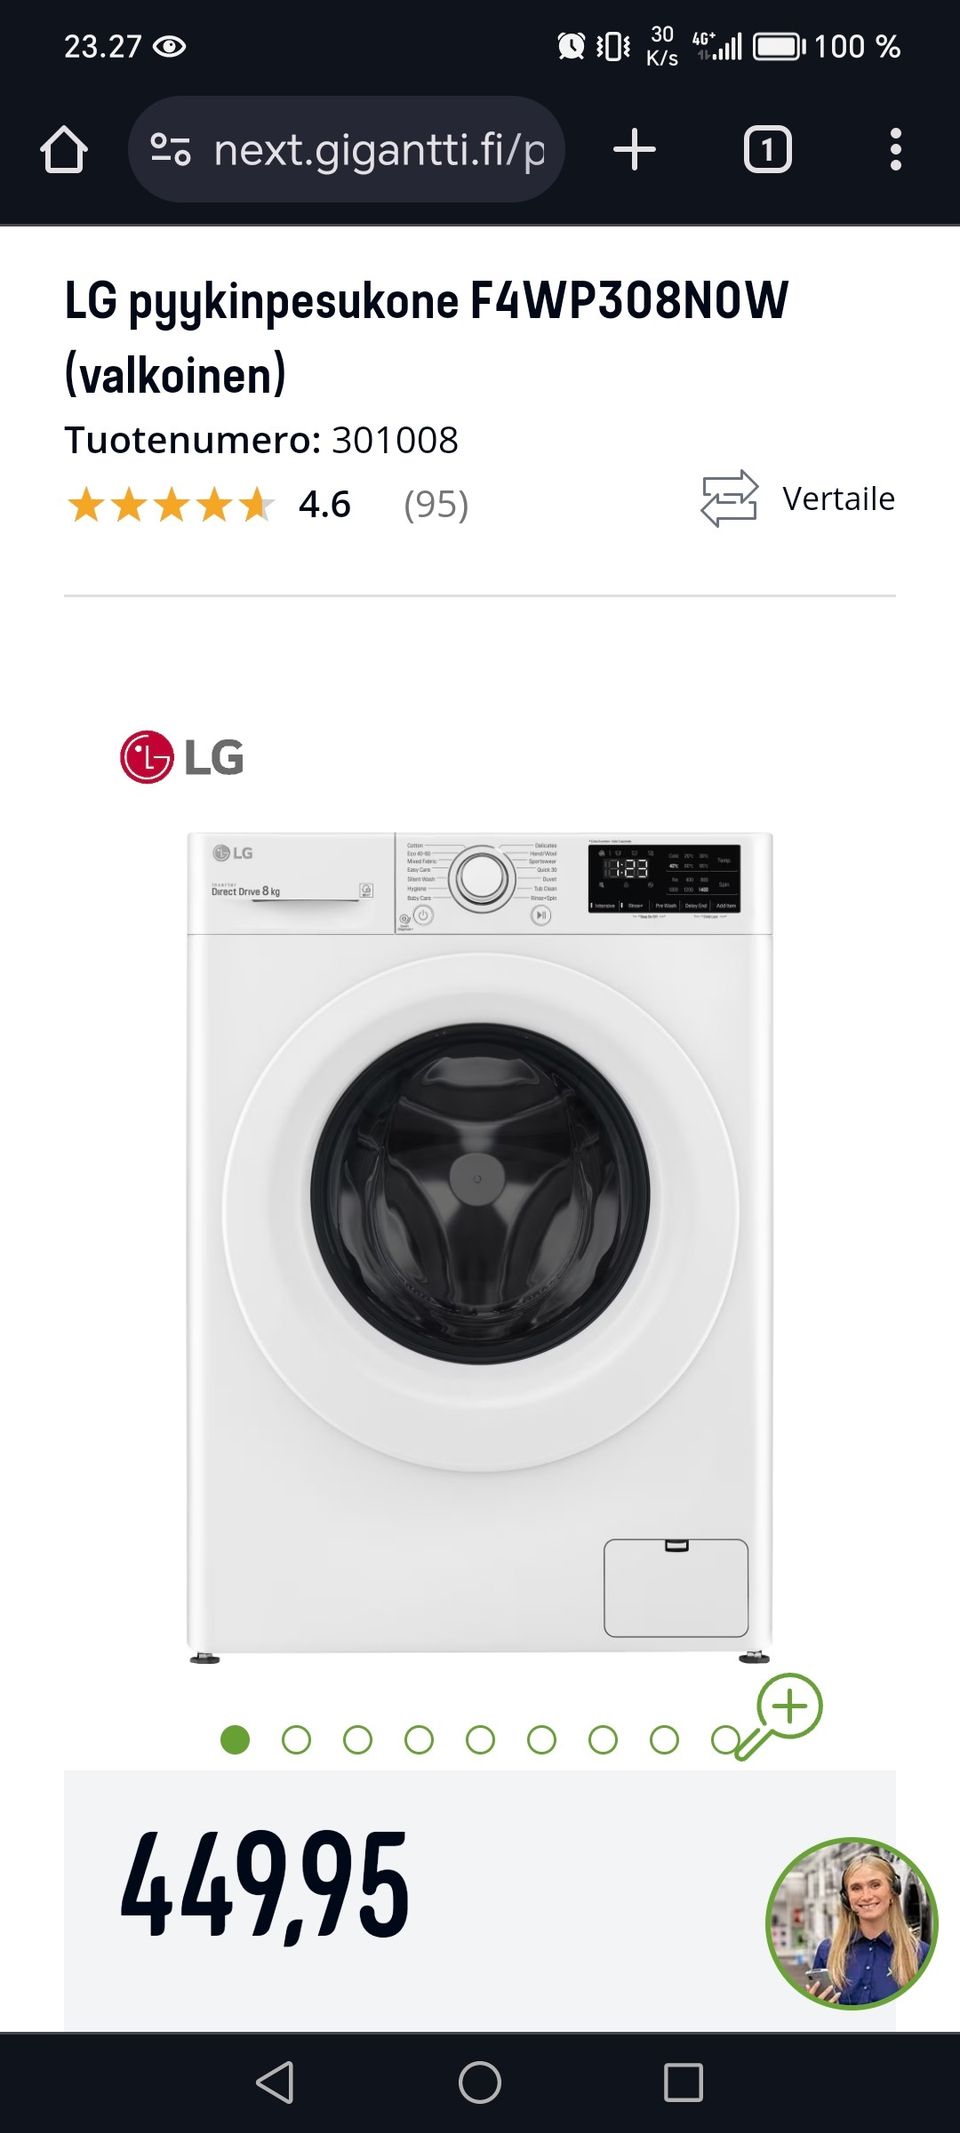 LG pyykkikone UUSI